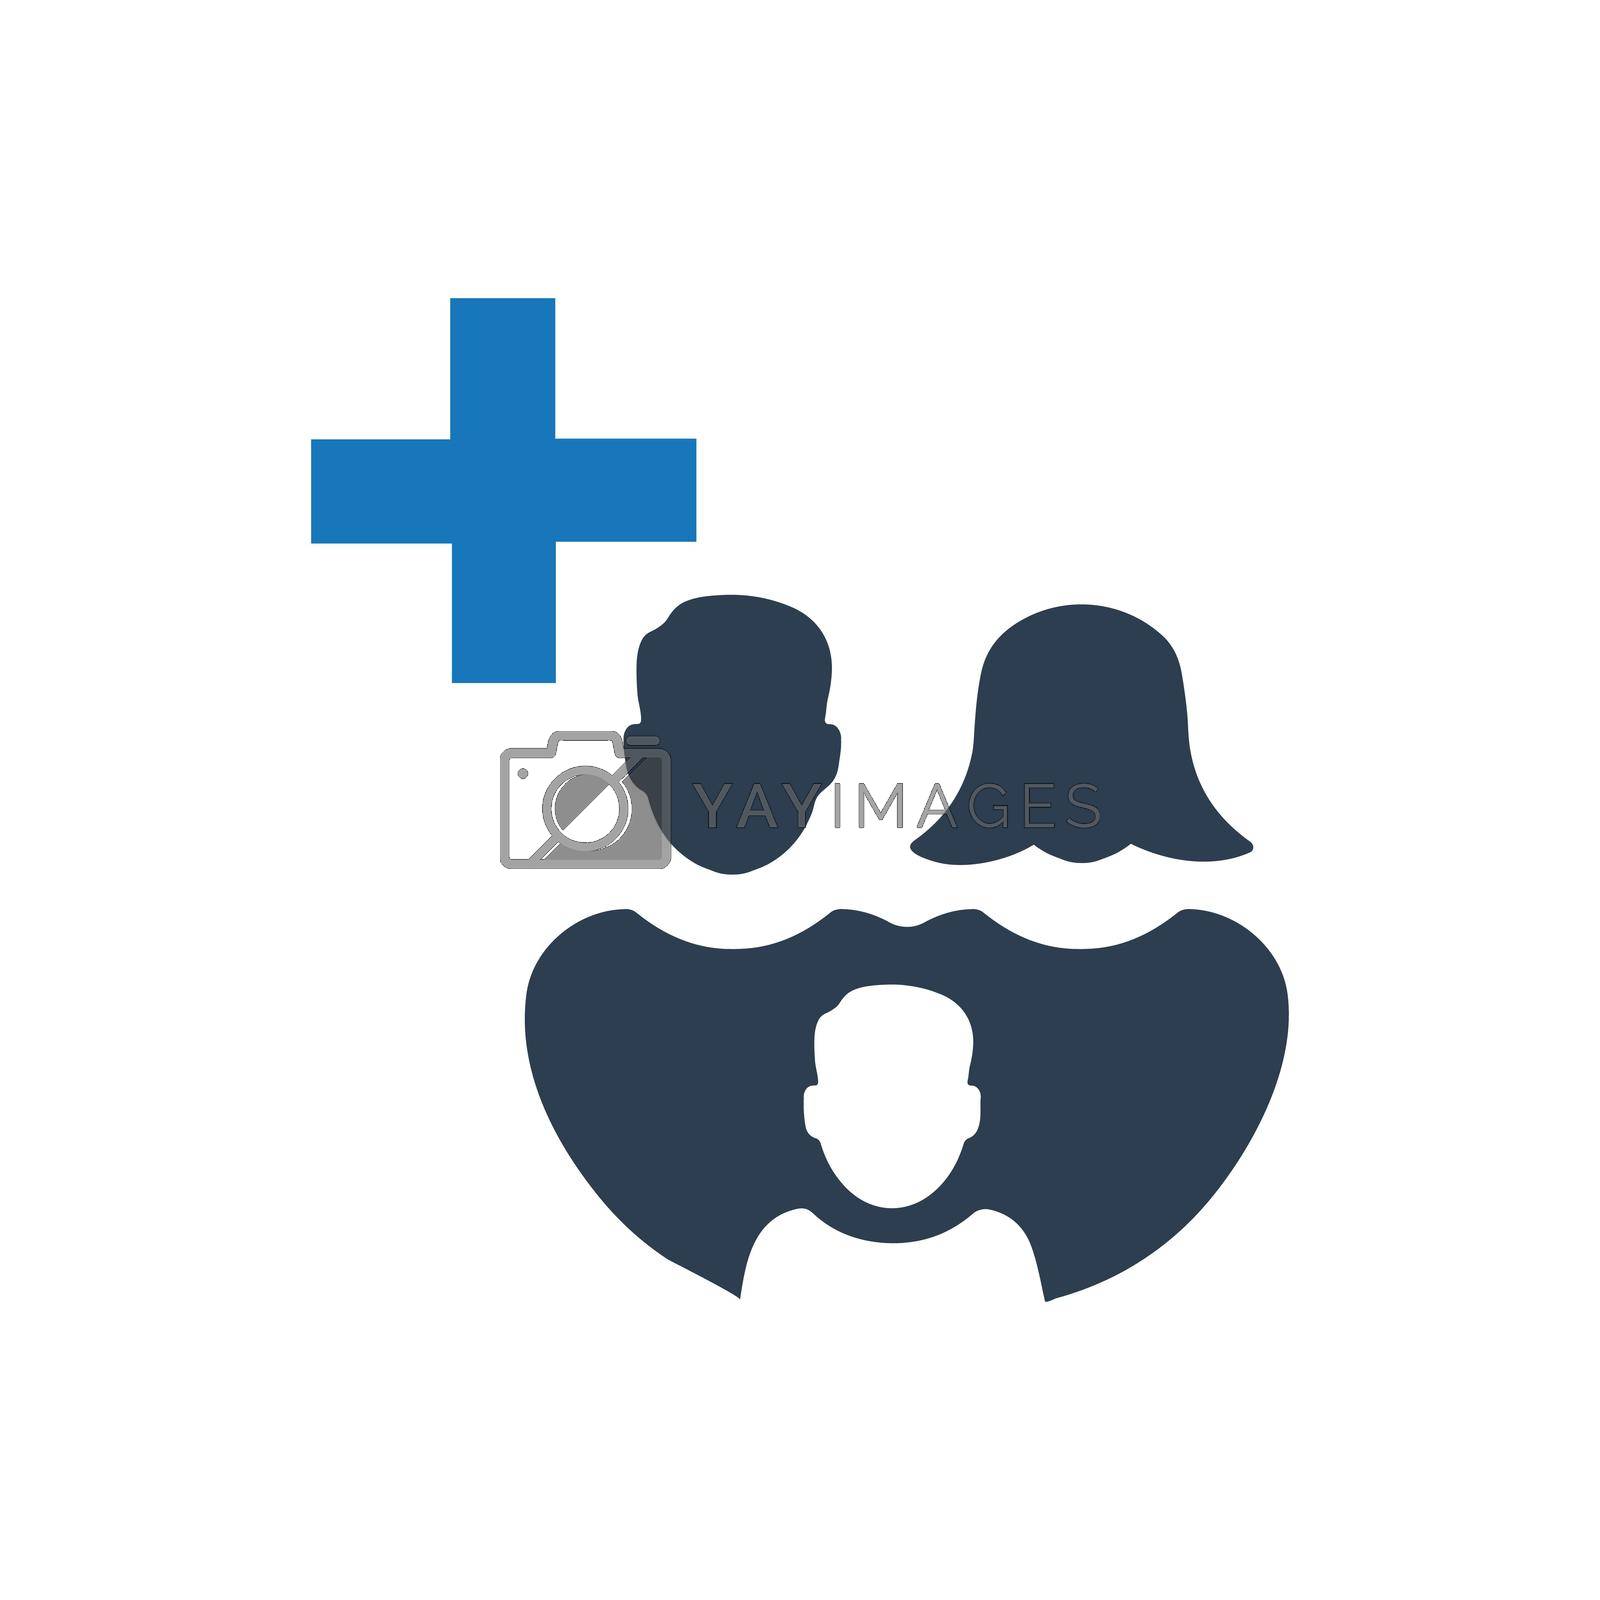 Family Healthcare icon. Vector EPS file.